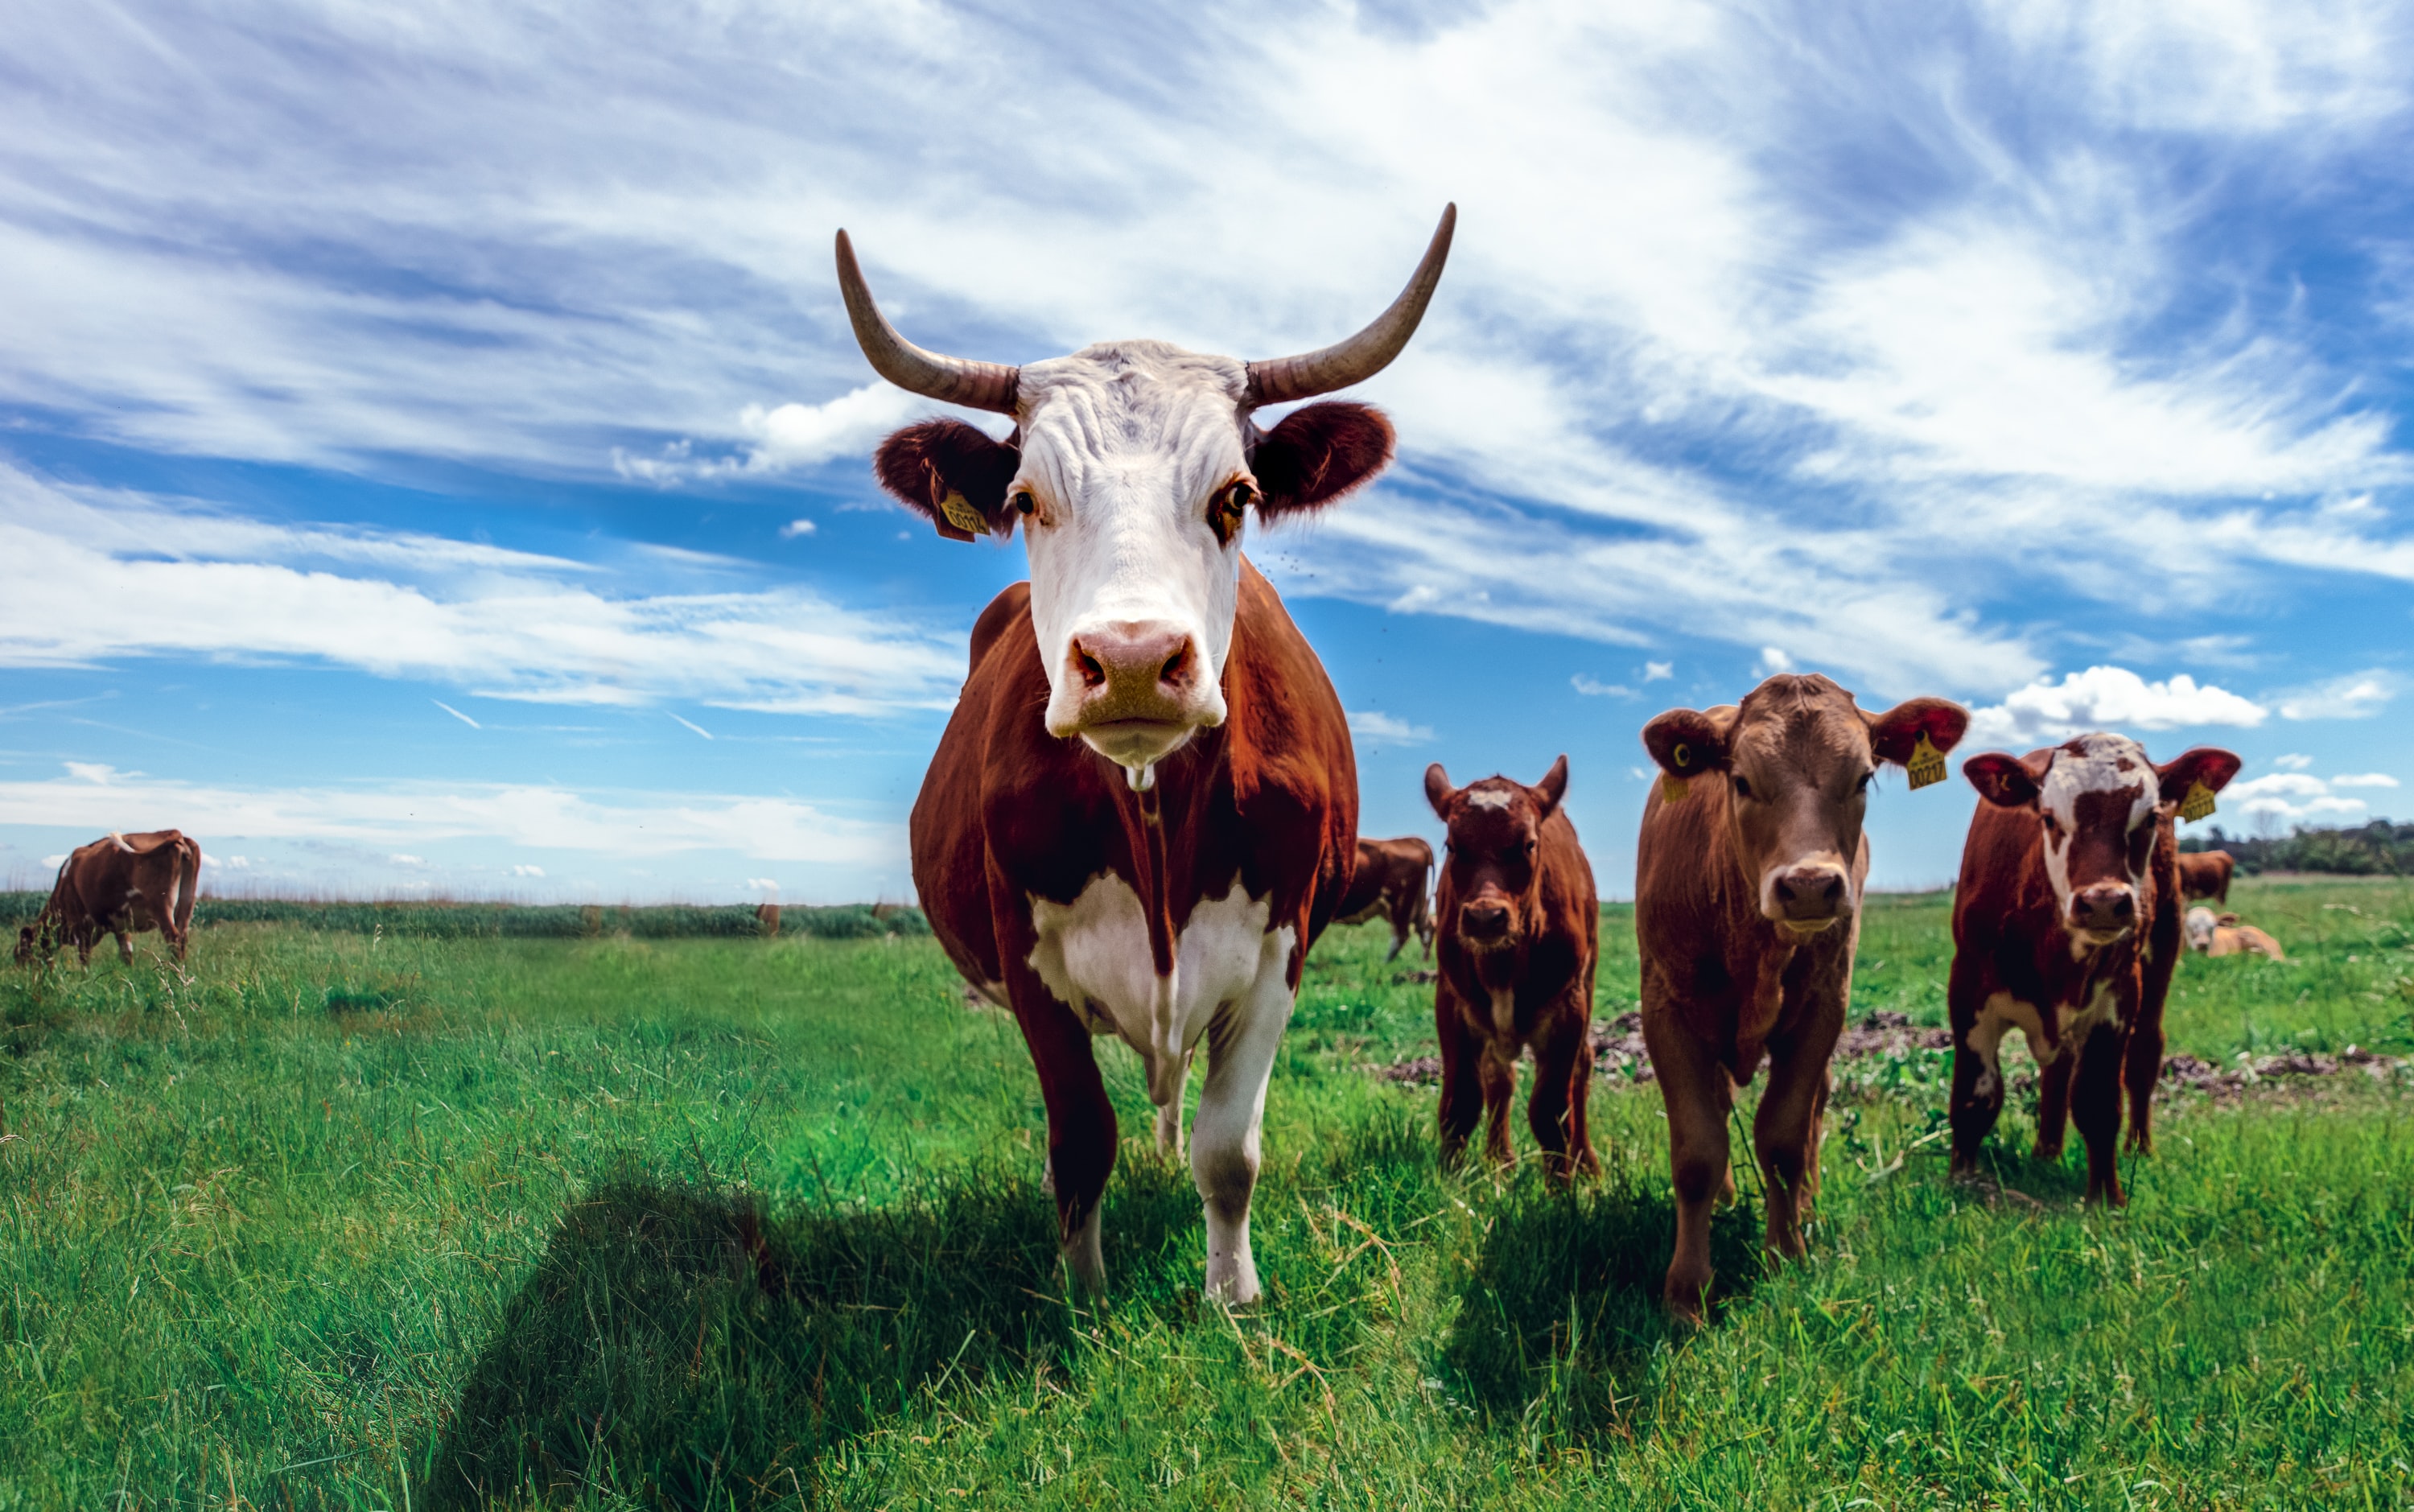 Cows in grass field.